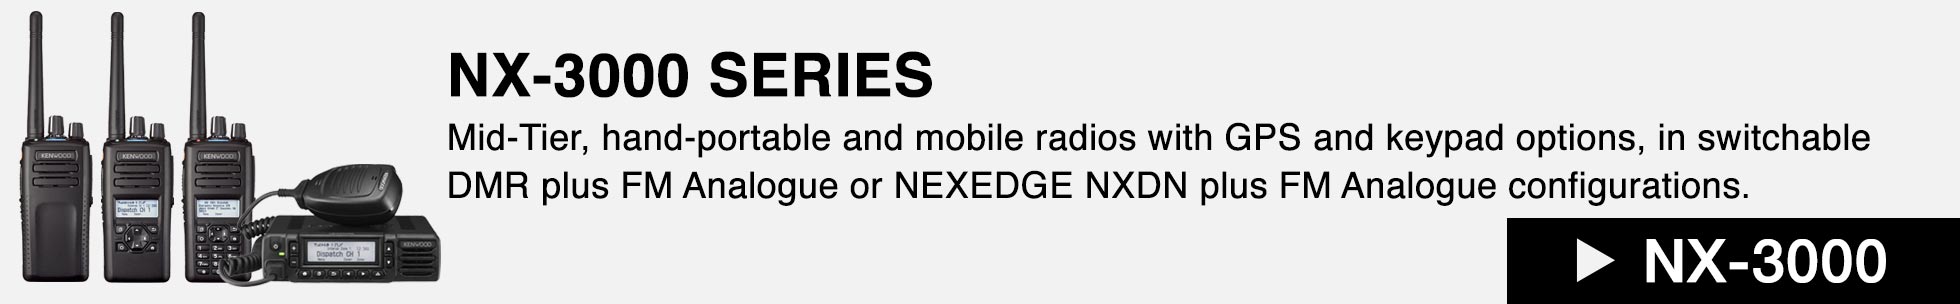 NX-3000 Series Two Way Radios